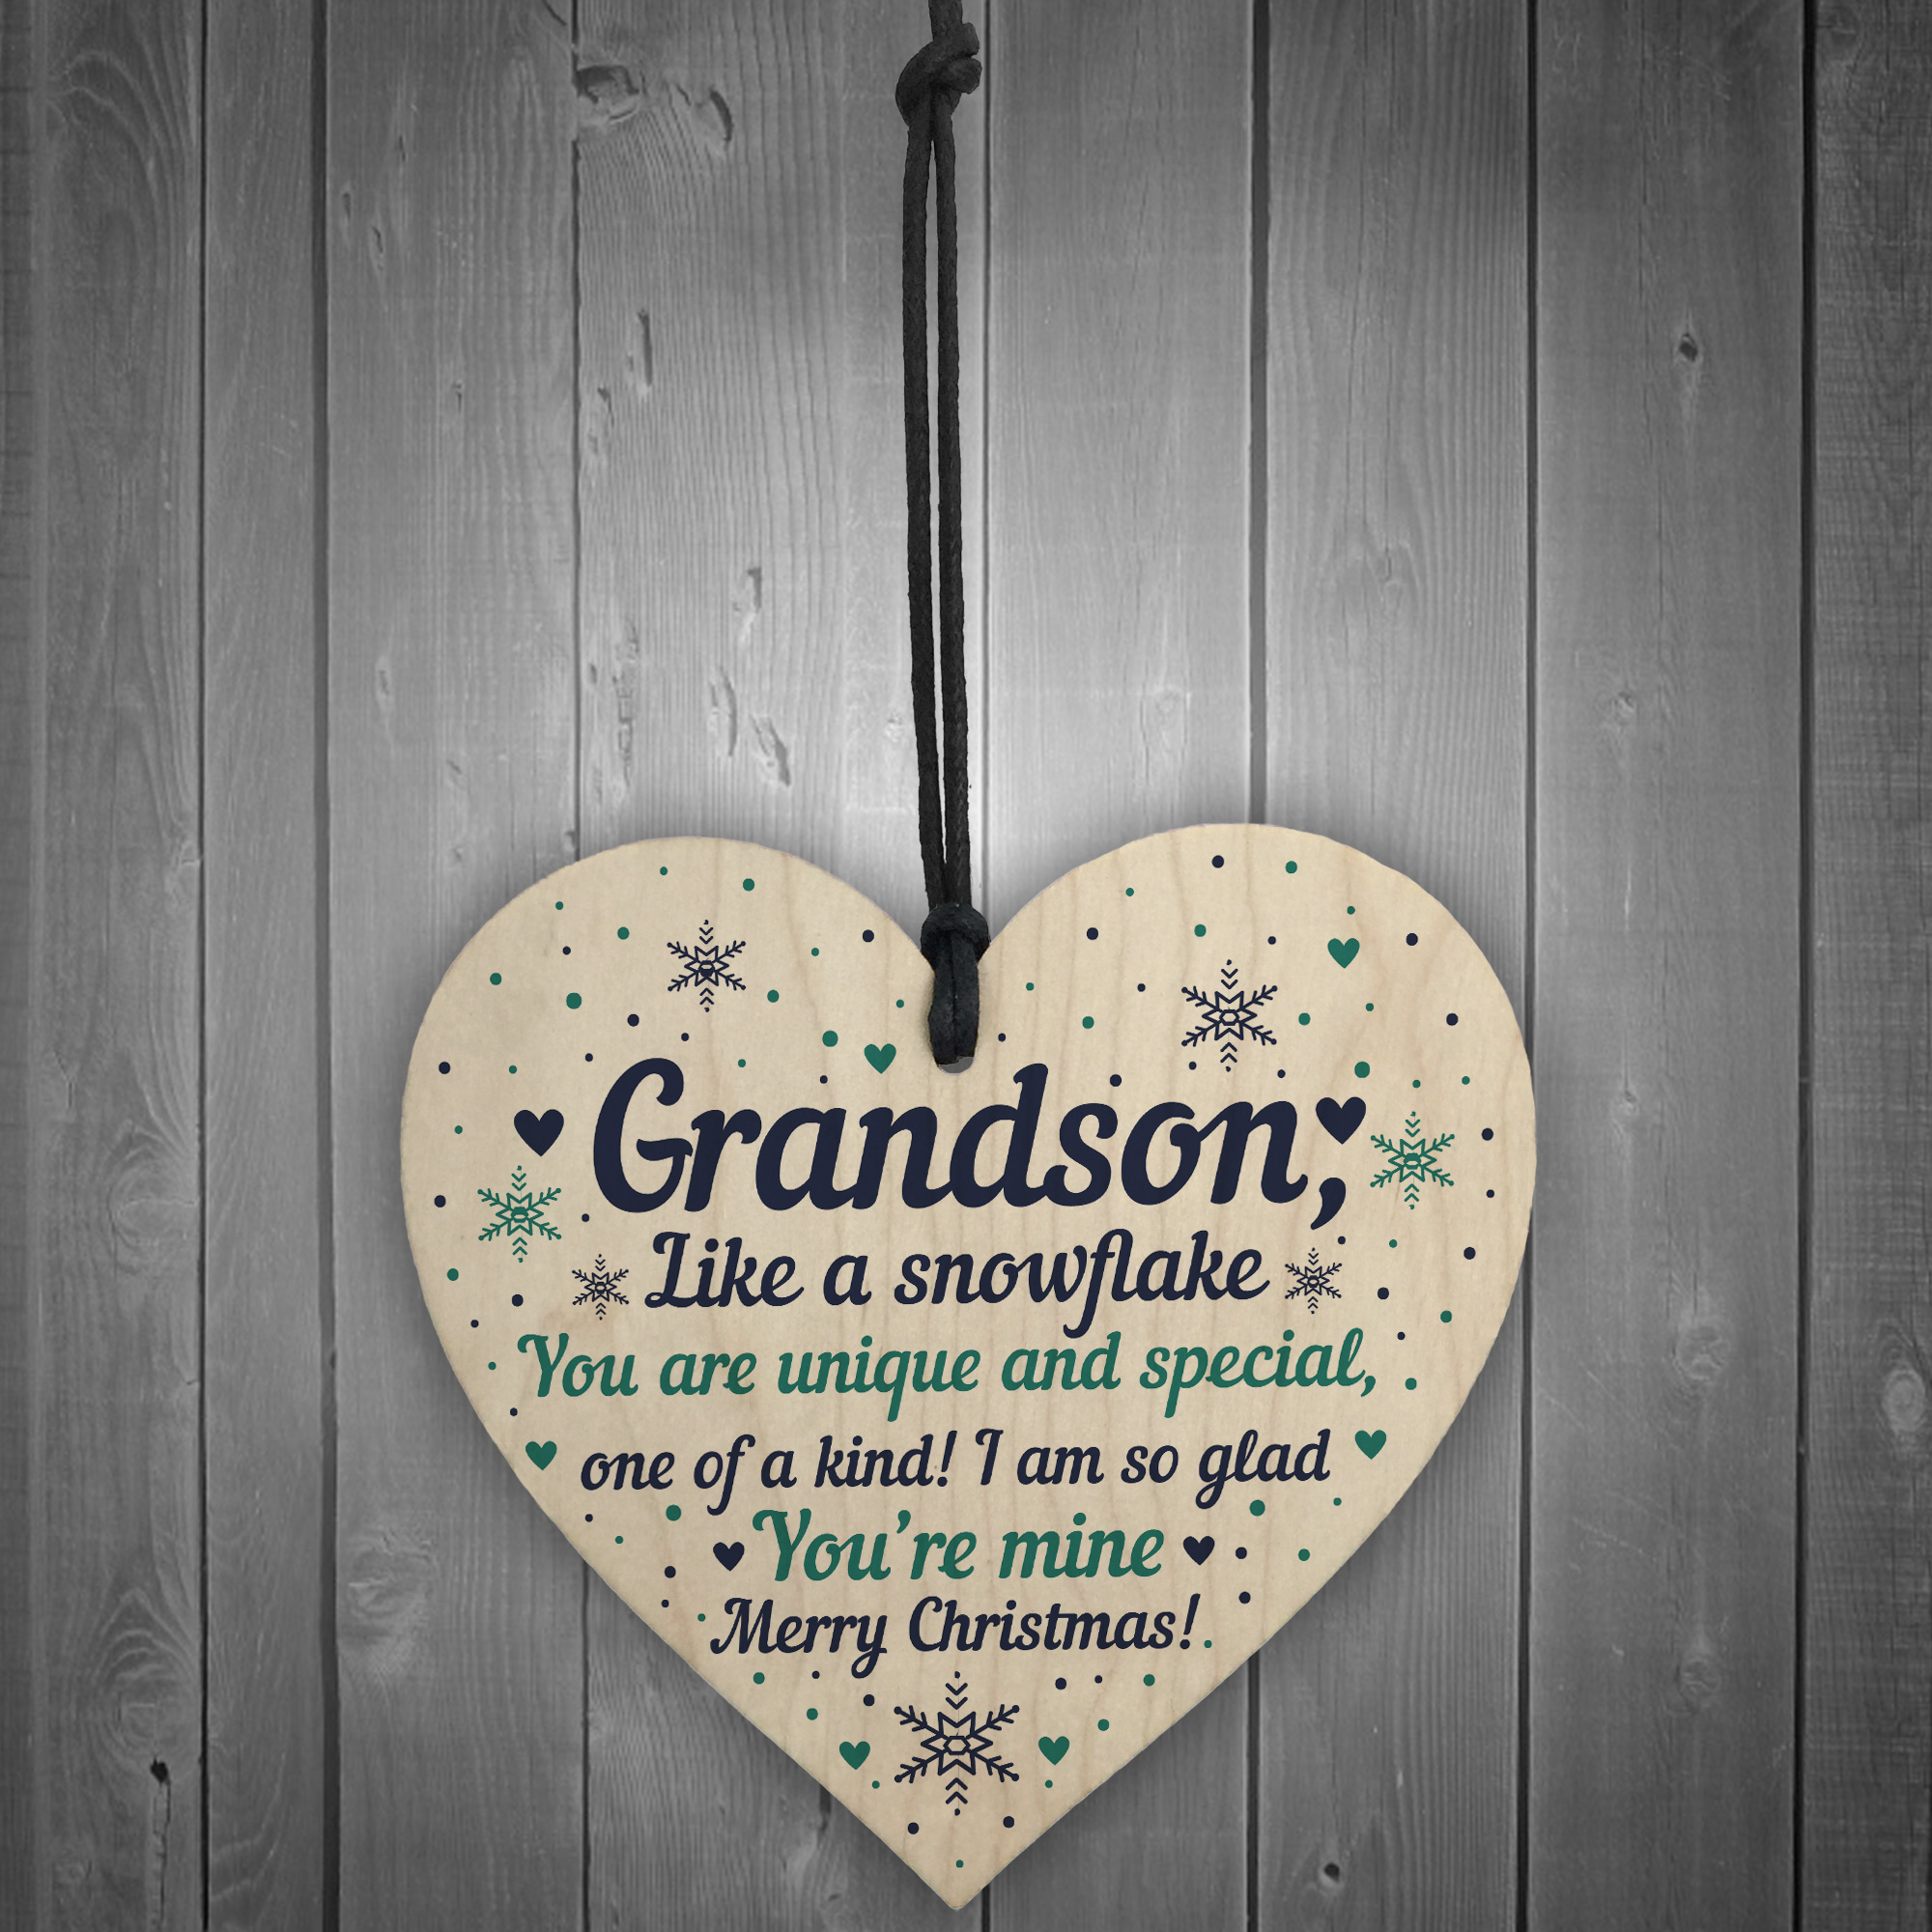 Grandson Christmas Ornament Bauble Wooden Heart Keepsake Gift From